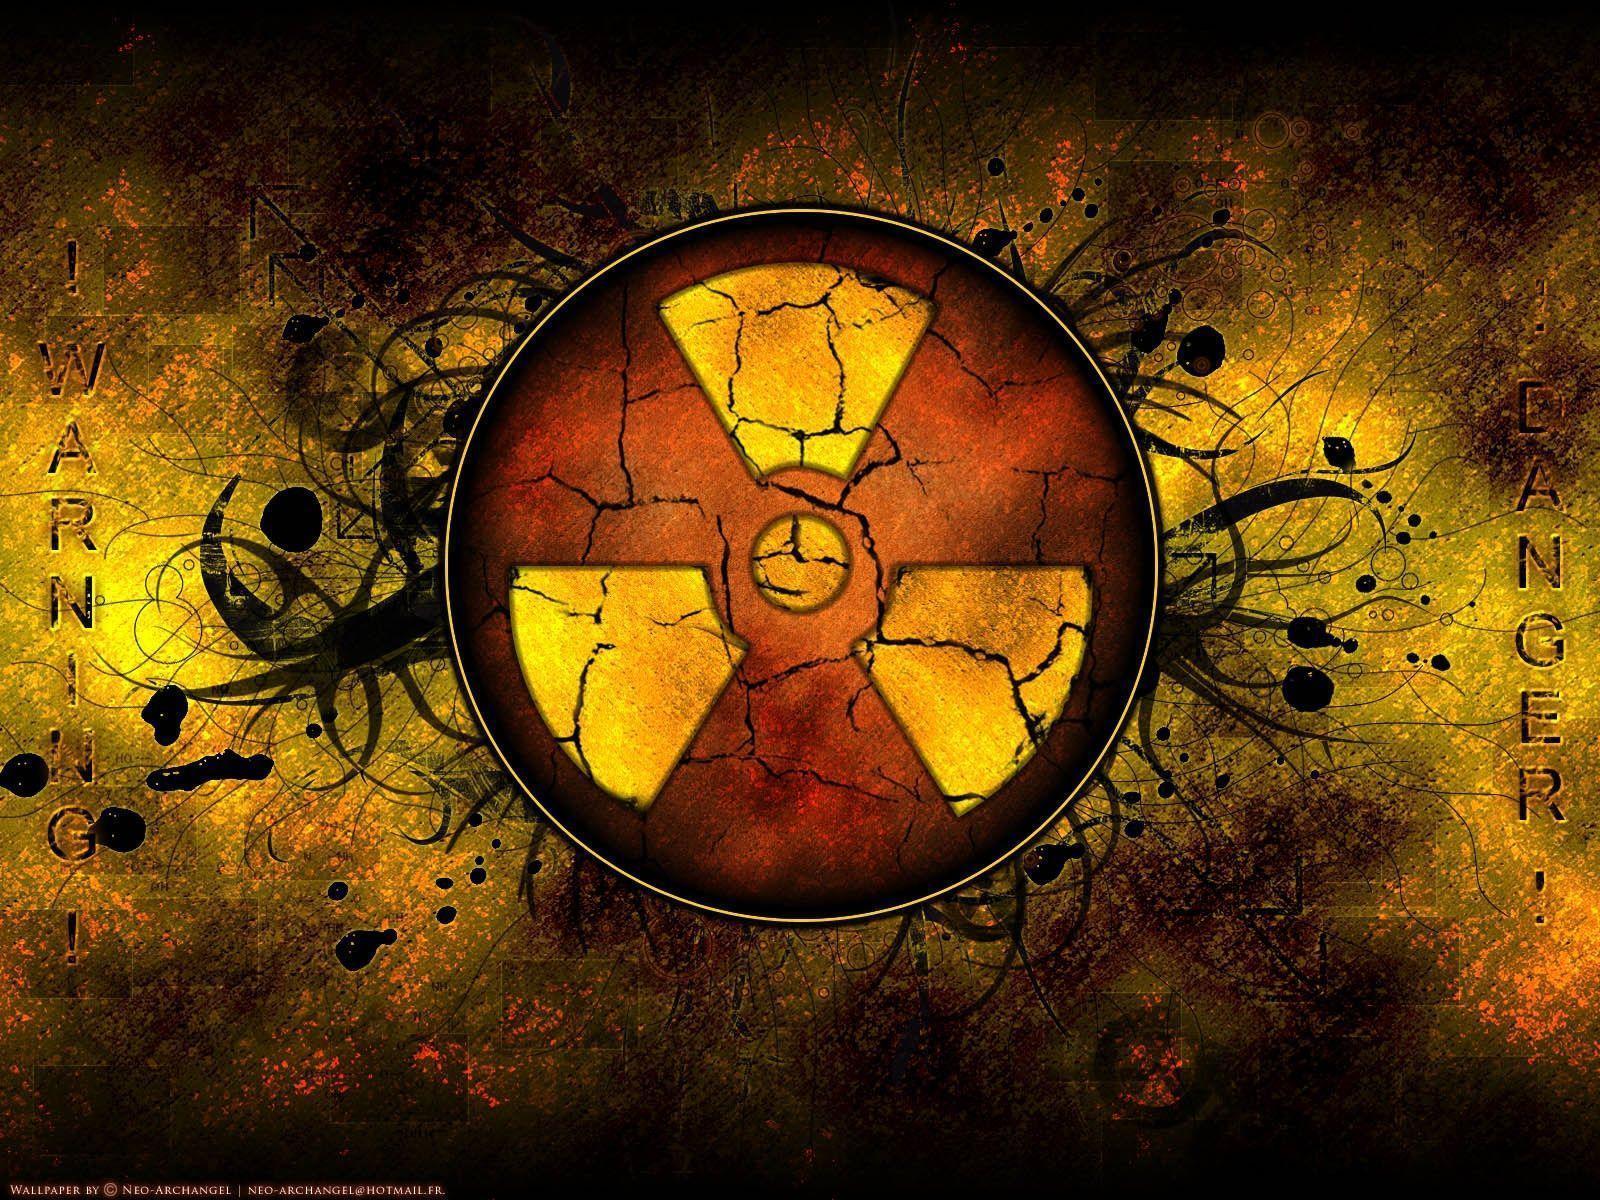 Wallpaper For > Radioactive Symbol Wallpaper